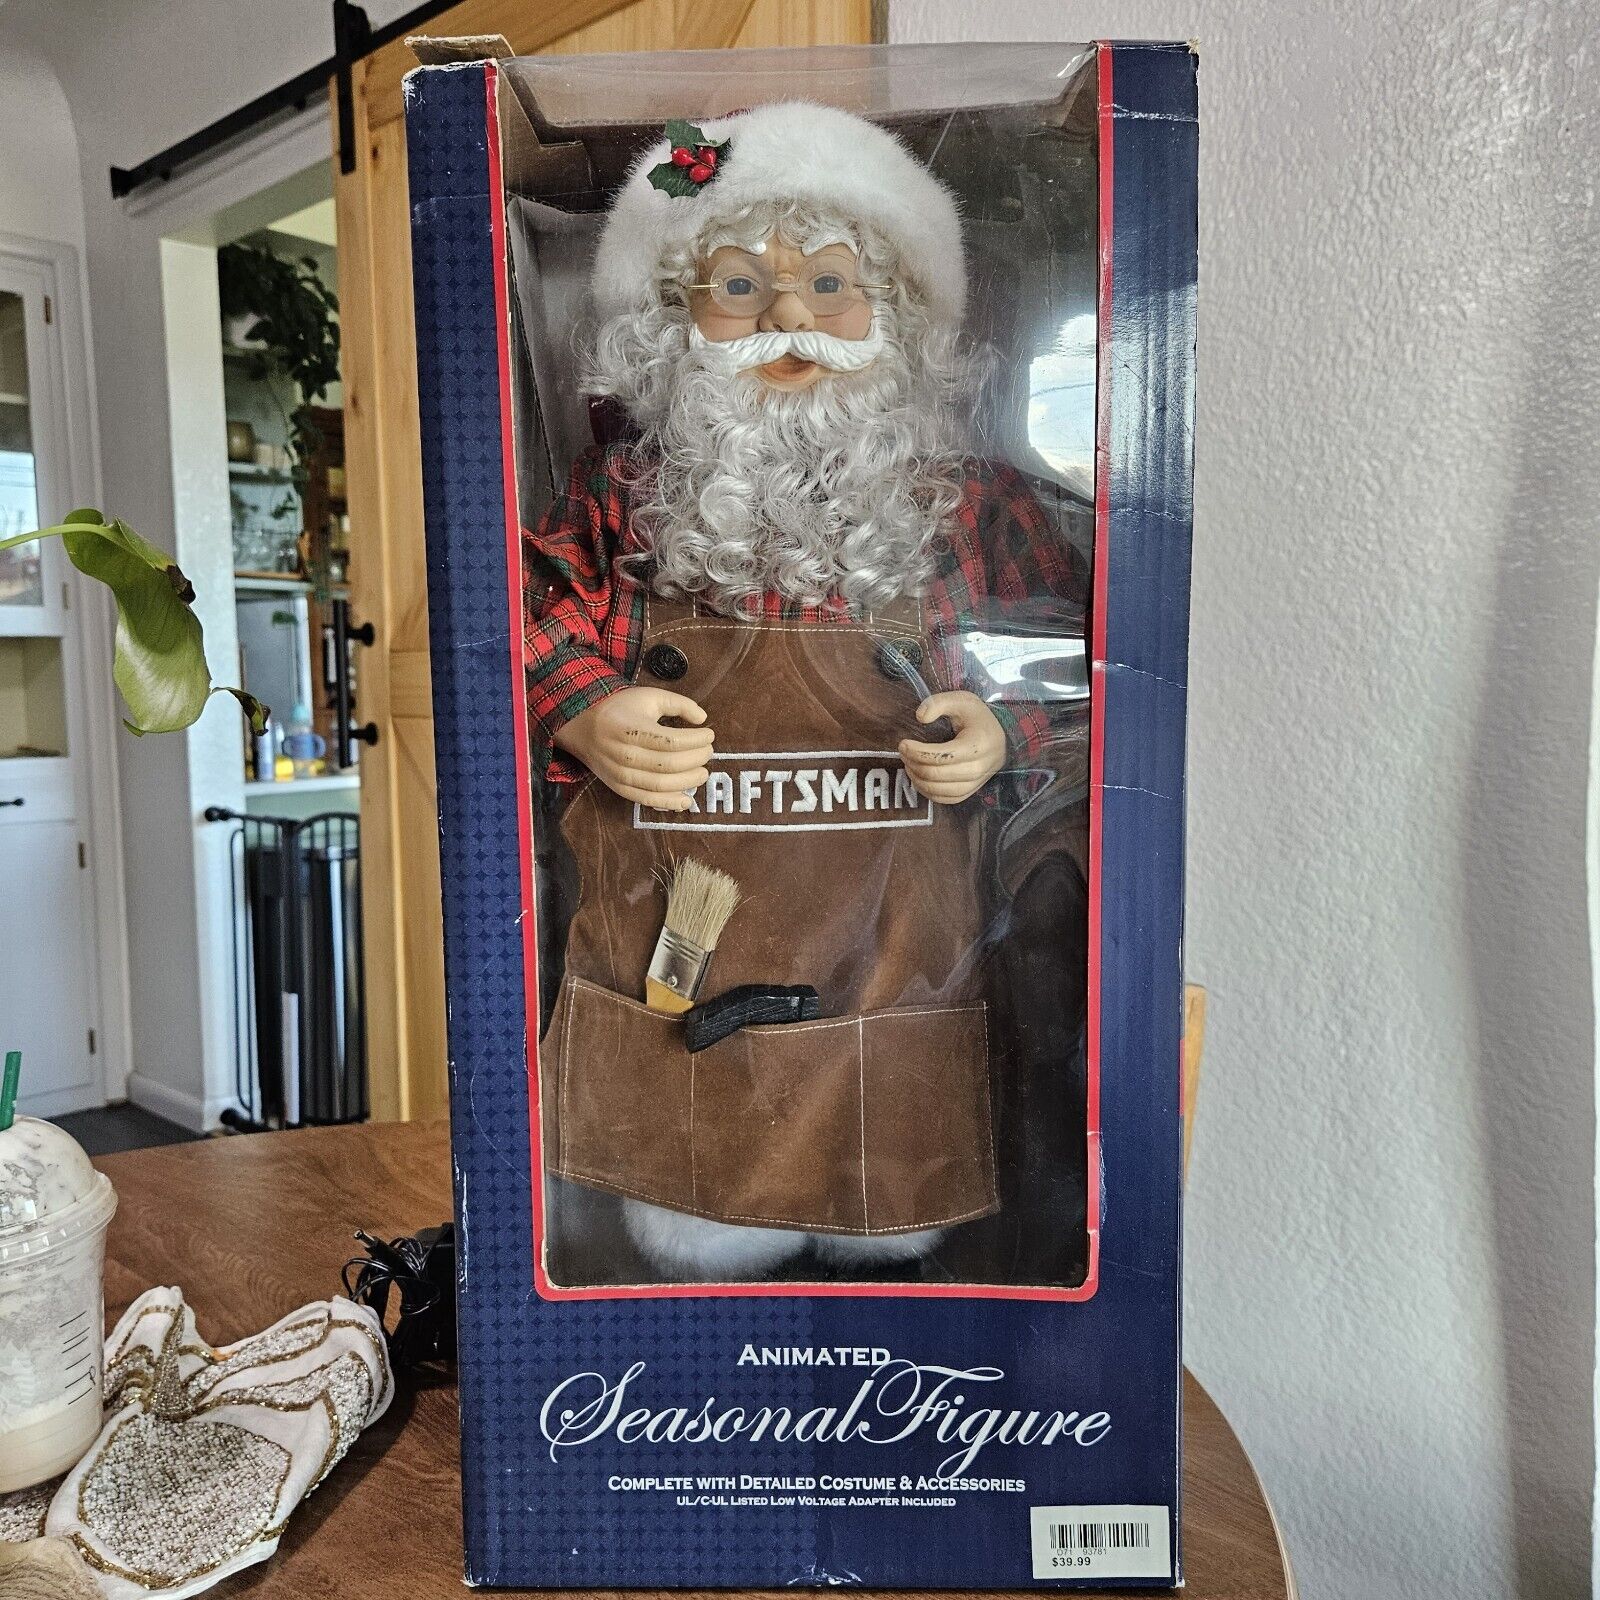 Rare Sears Craftsman Animated Santa Claus Figurine Doll Christmas